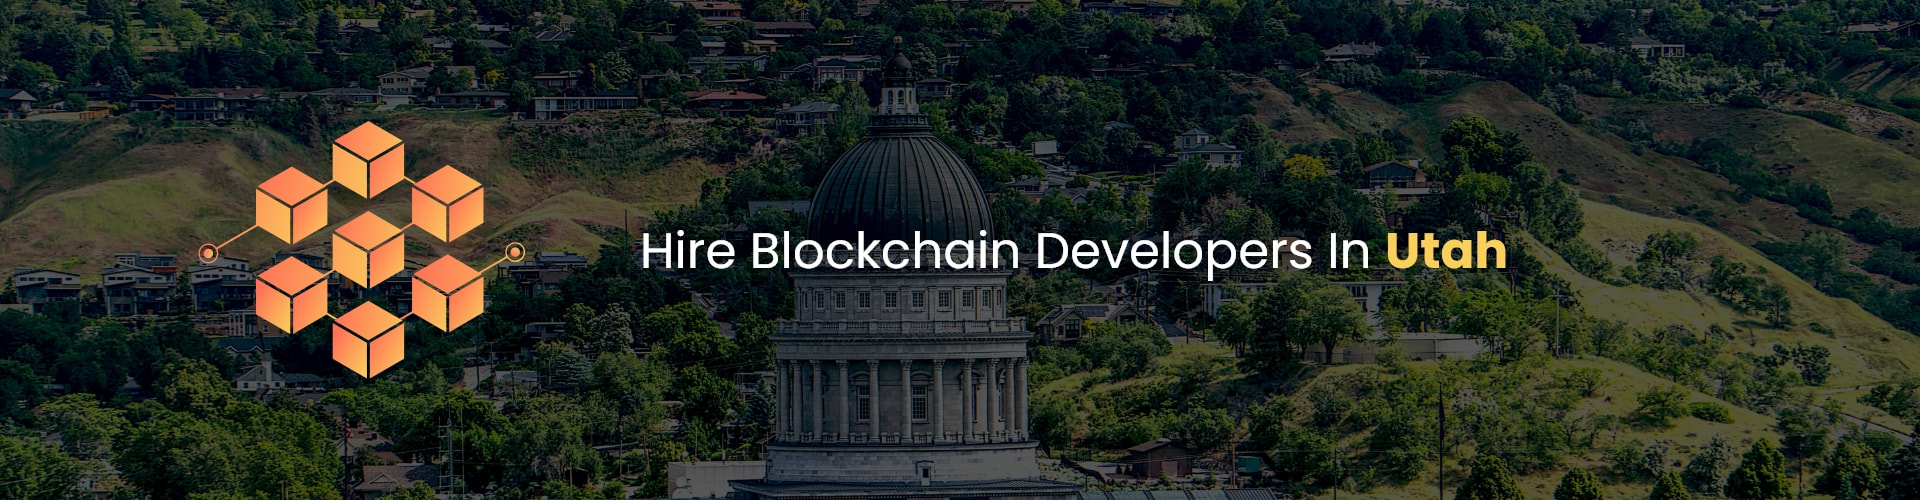 hire blockchain developers in utah